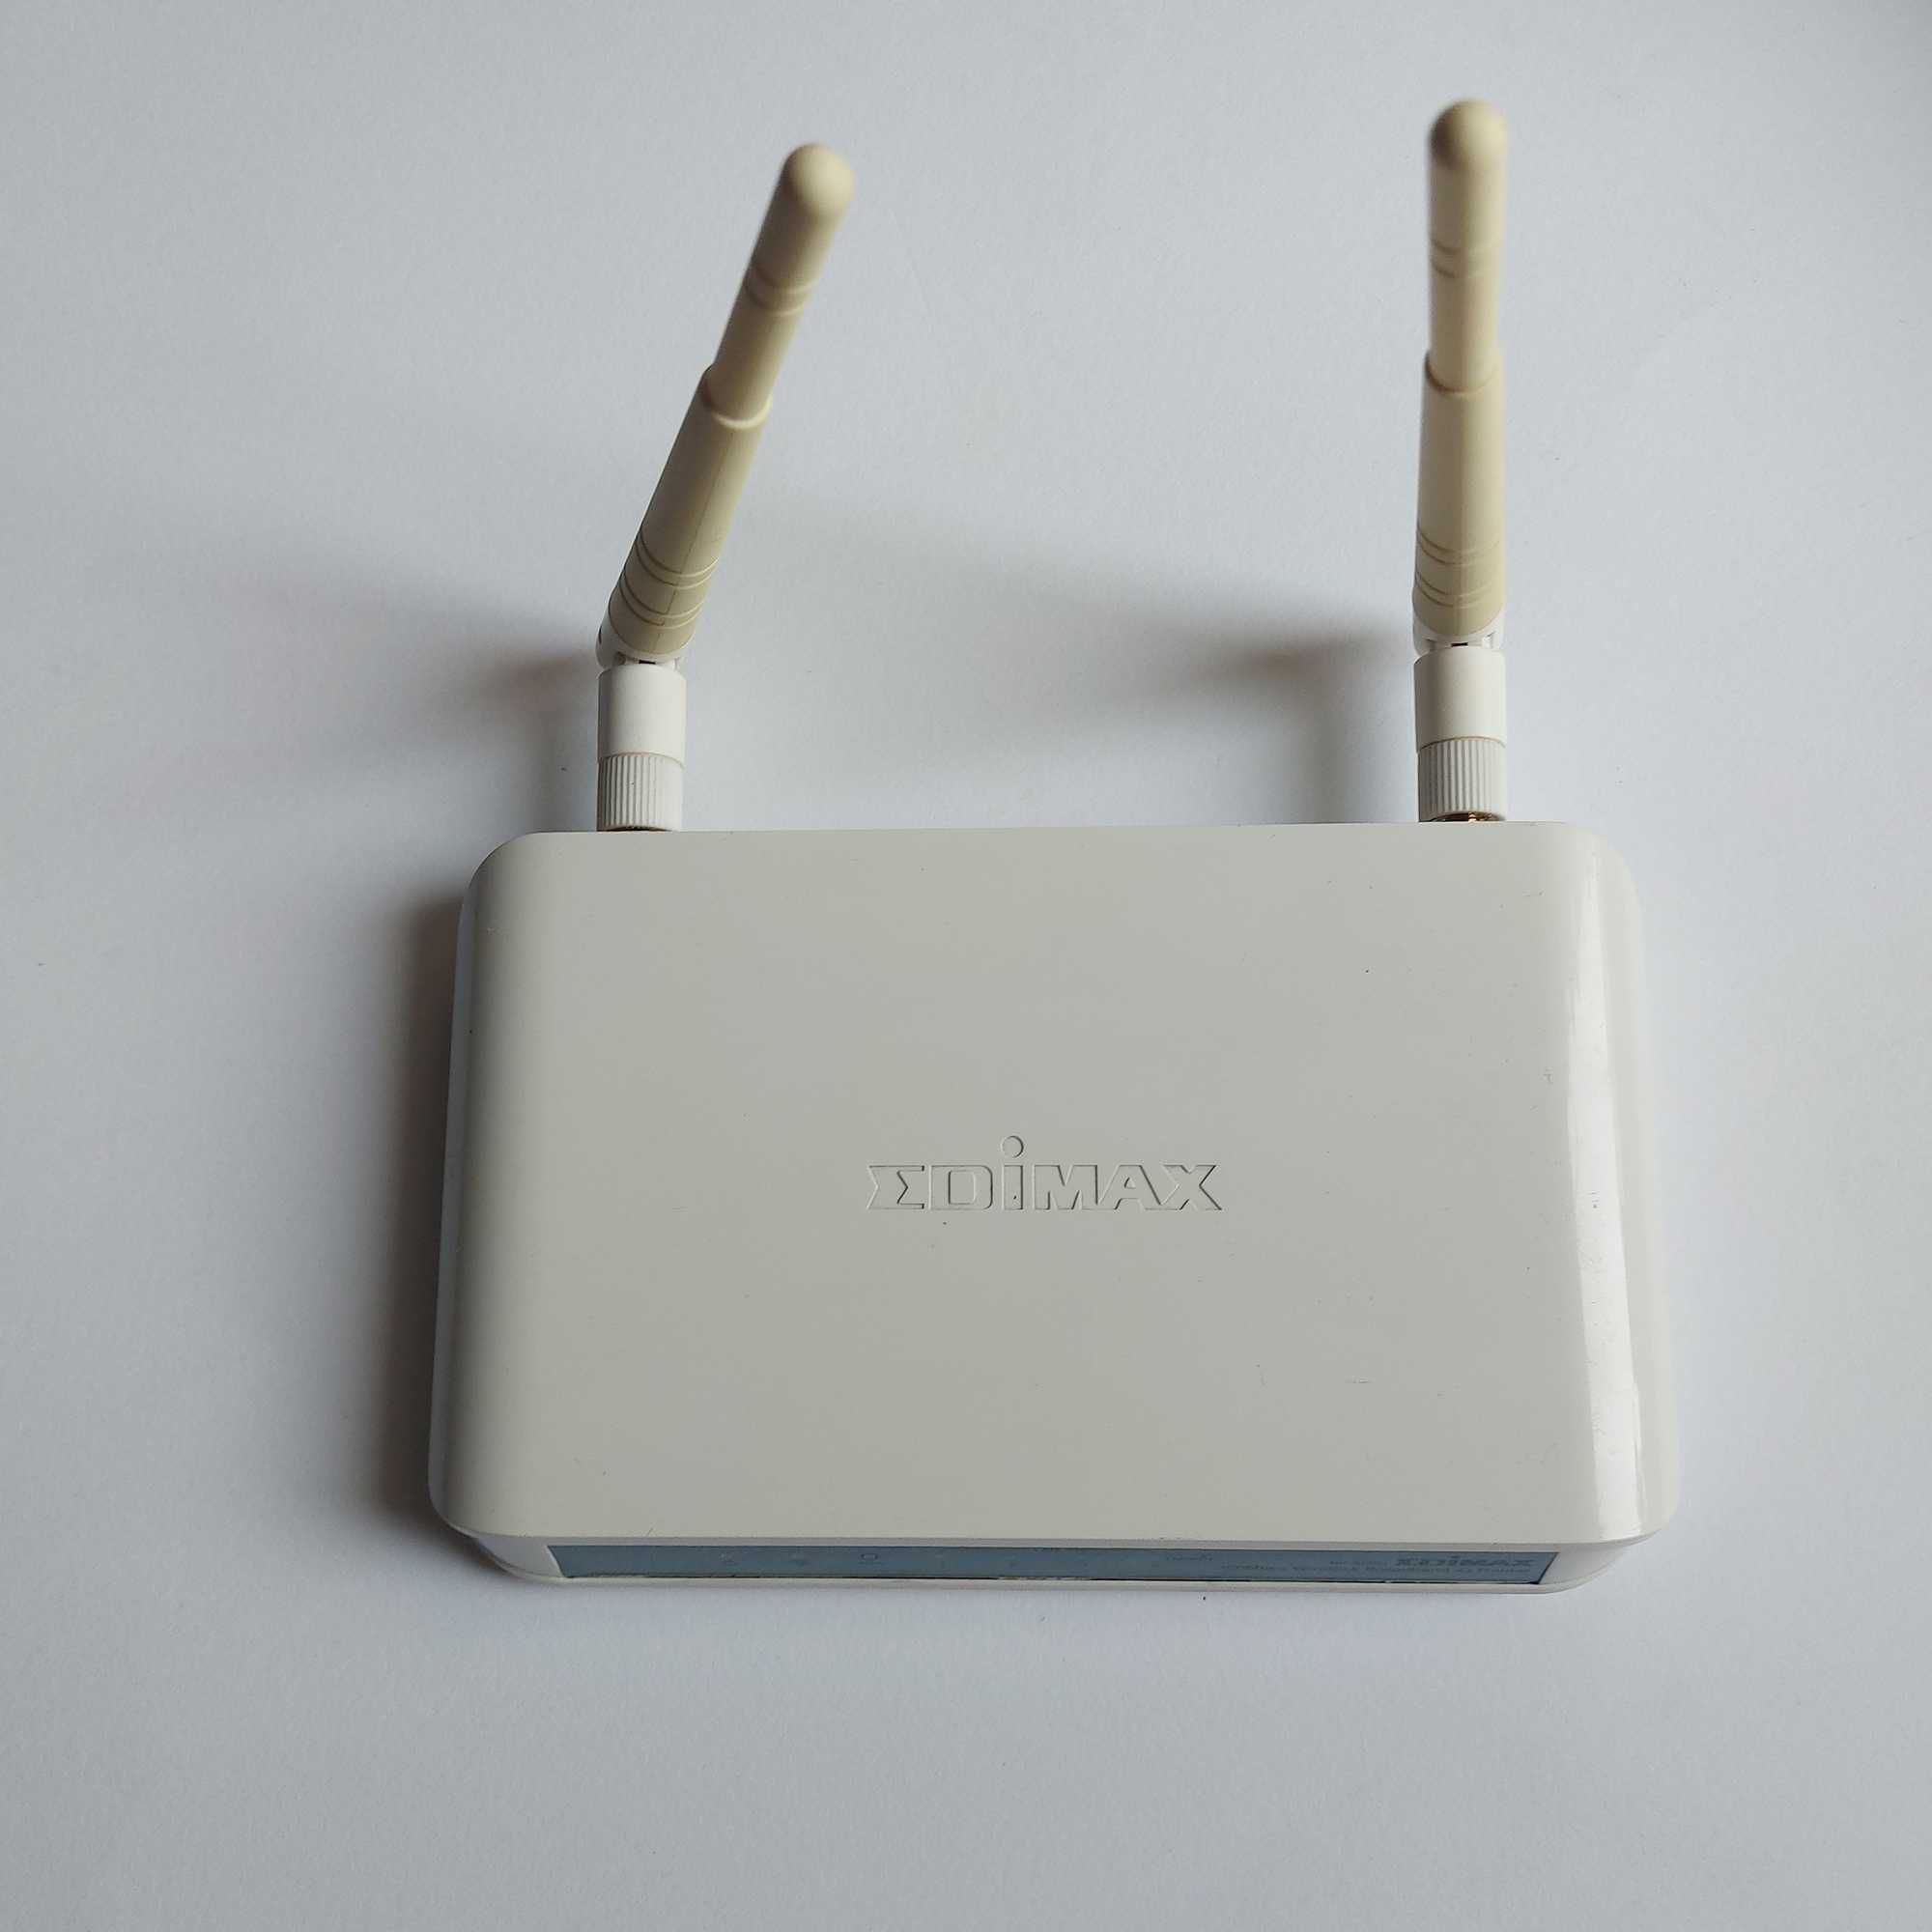 Wi-Fi роутер Edimax BR-6428n 300 Mбит/с